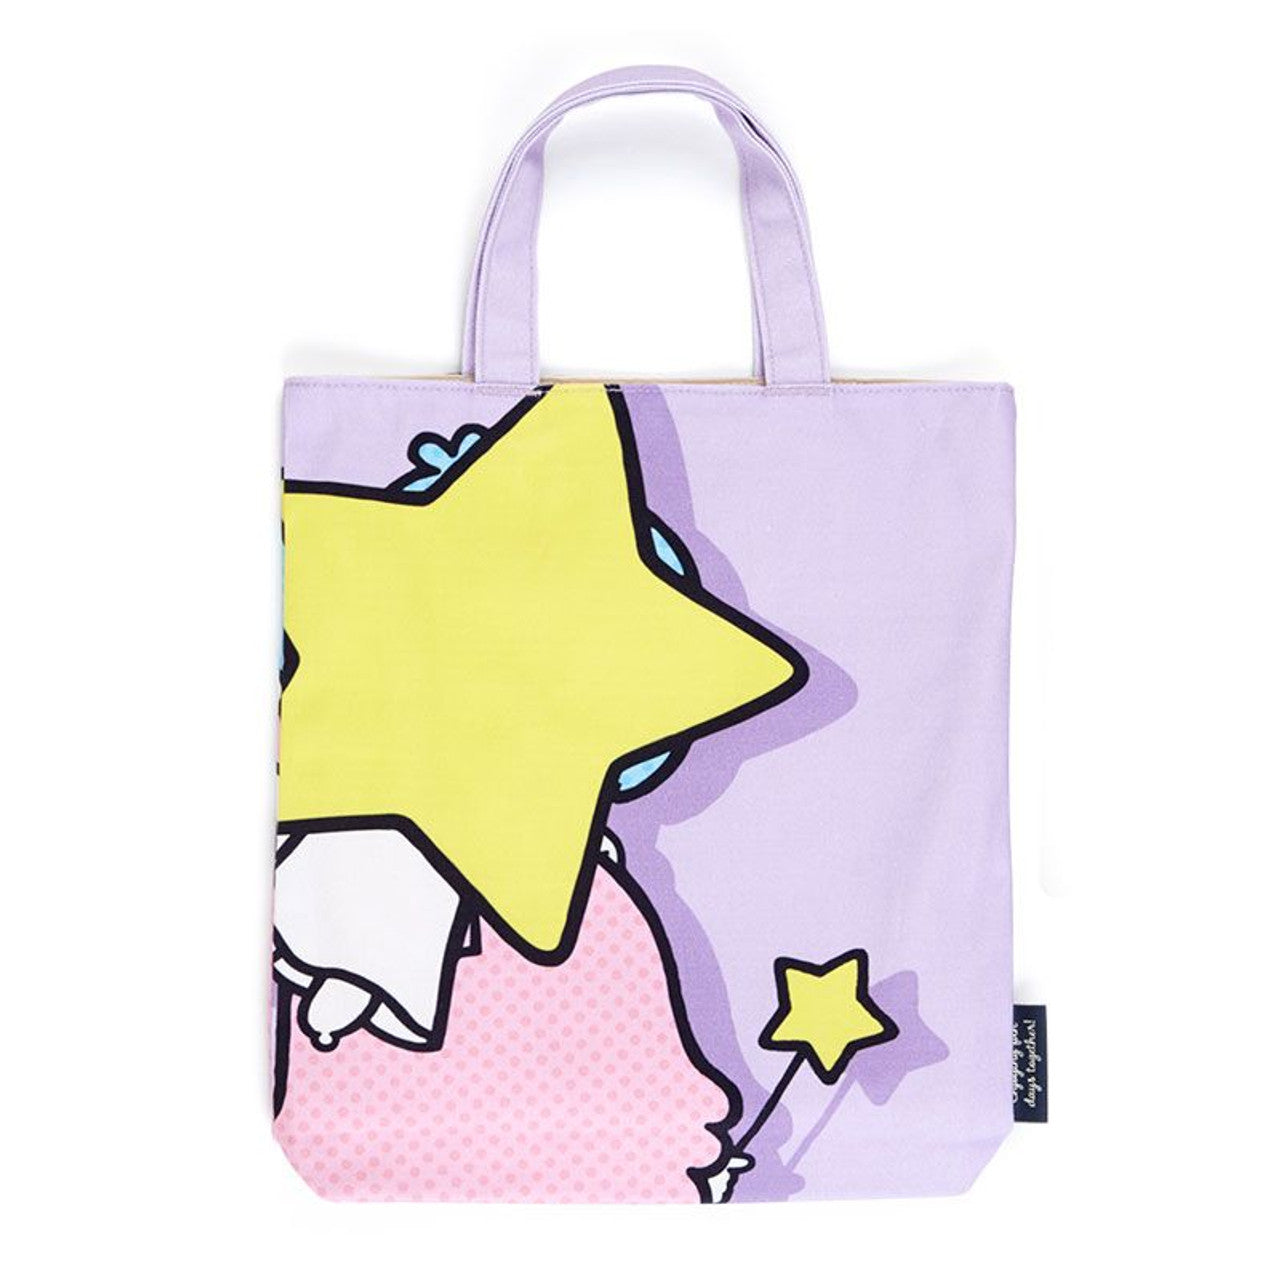 Sanrio Little Twin Stars Simple Canvas Tote Bag